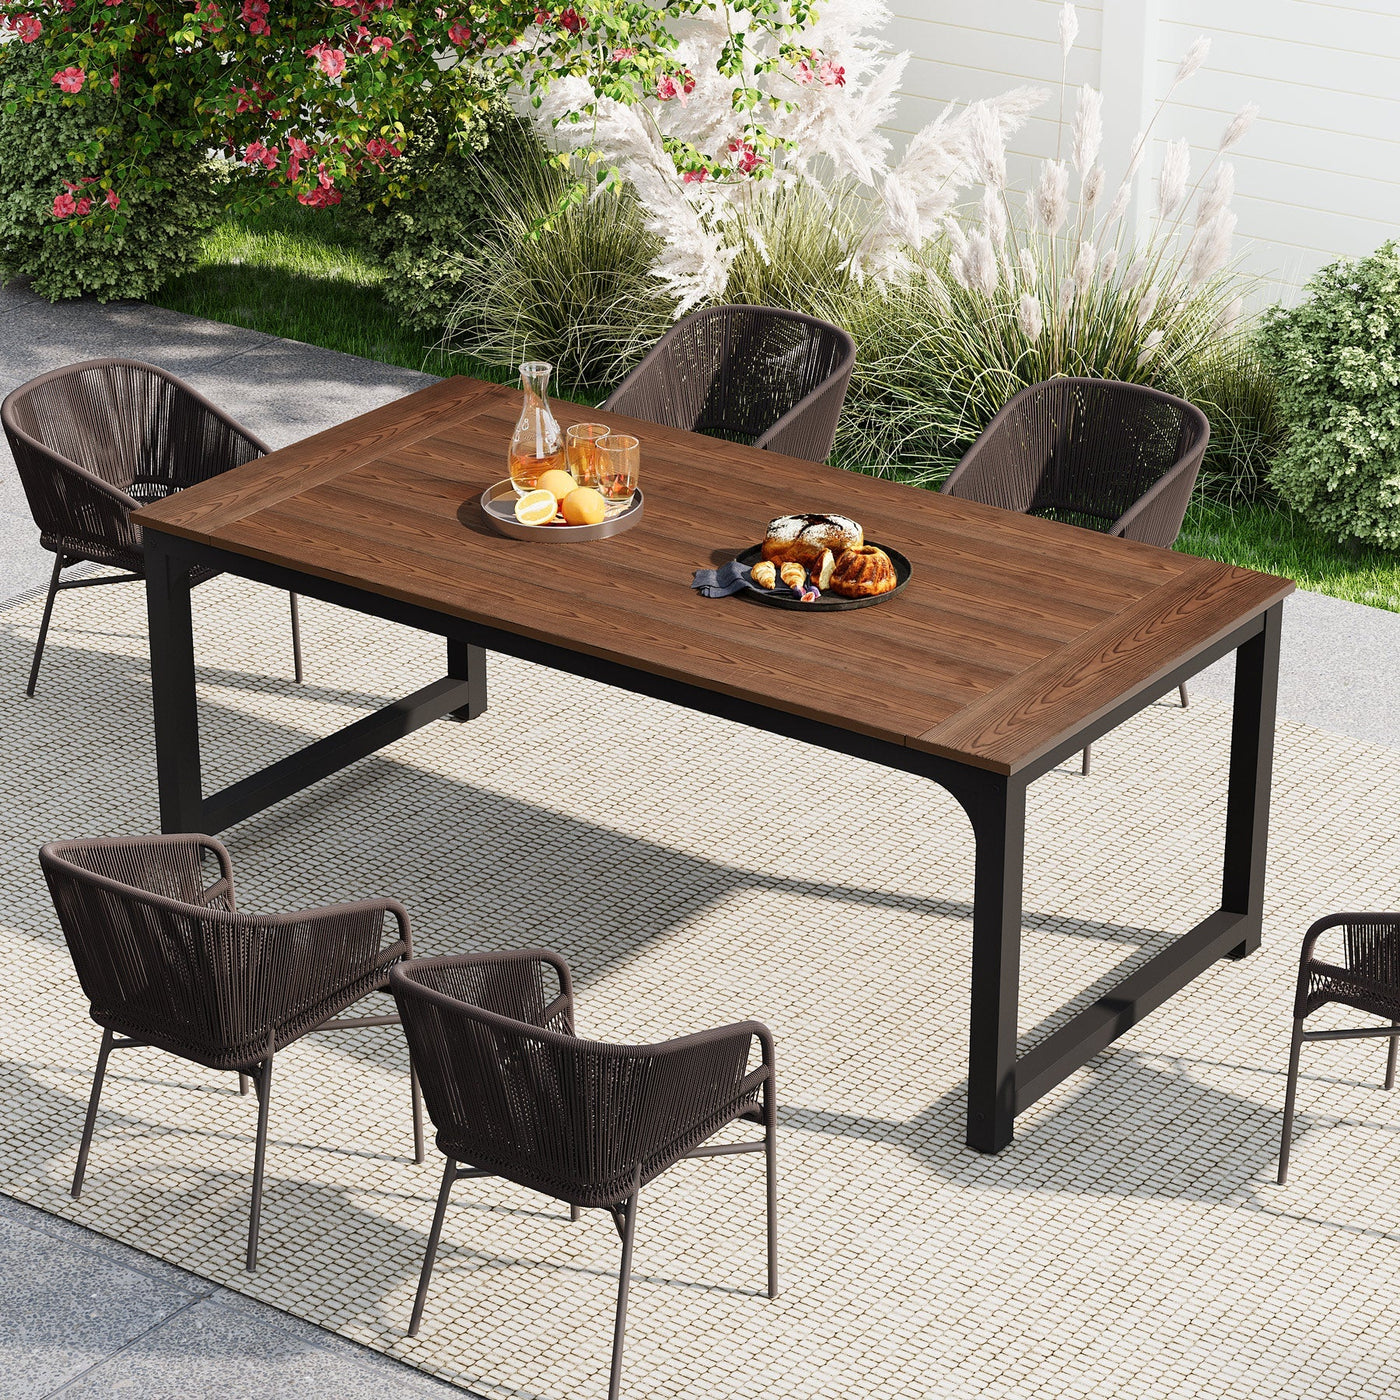 Marta Outdoor Indoor Dining Table | Wooden Rectangular Patio Kitchen Table